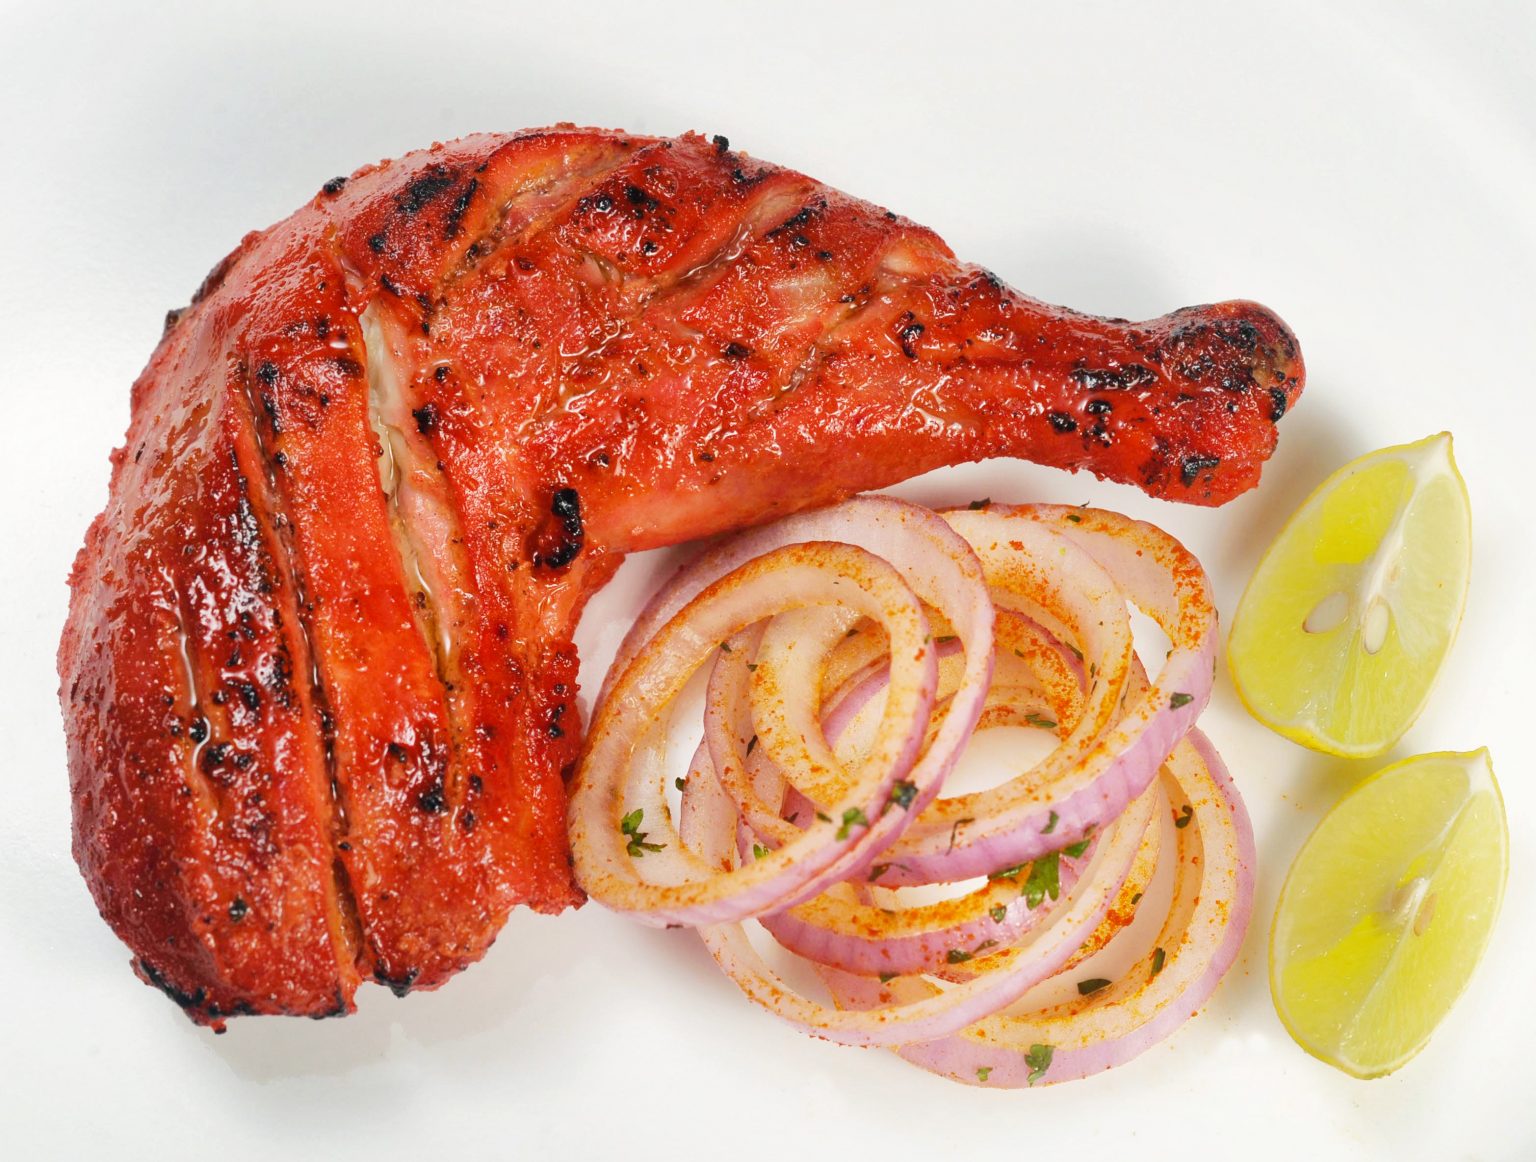 Cuisine Of Punjab: Tandoori Chicken - Gateway To Sikhism